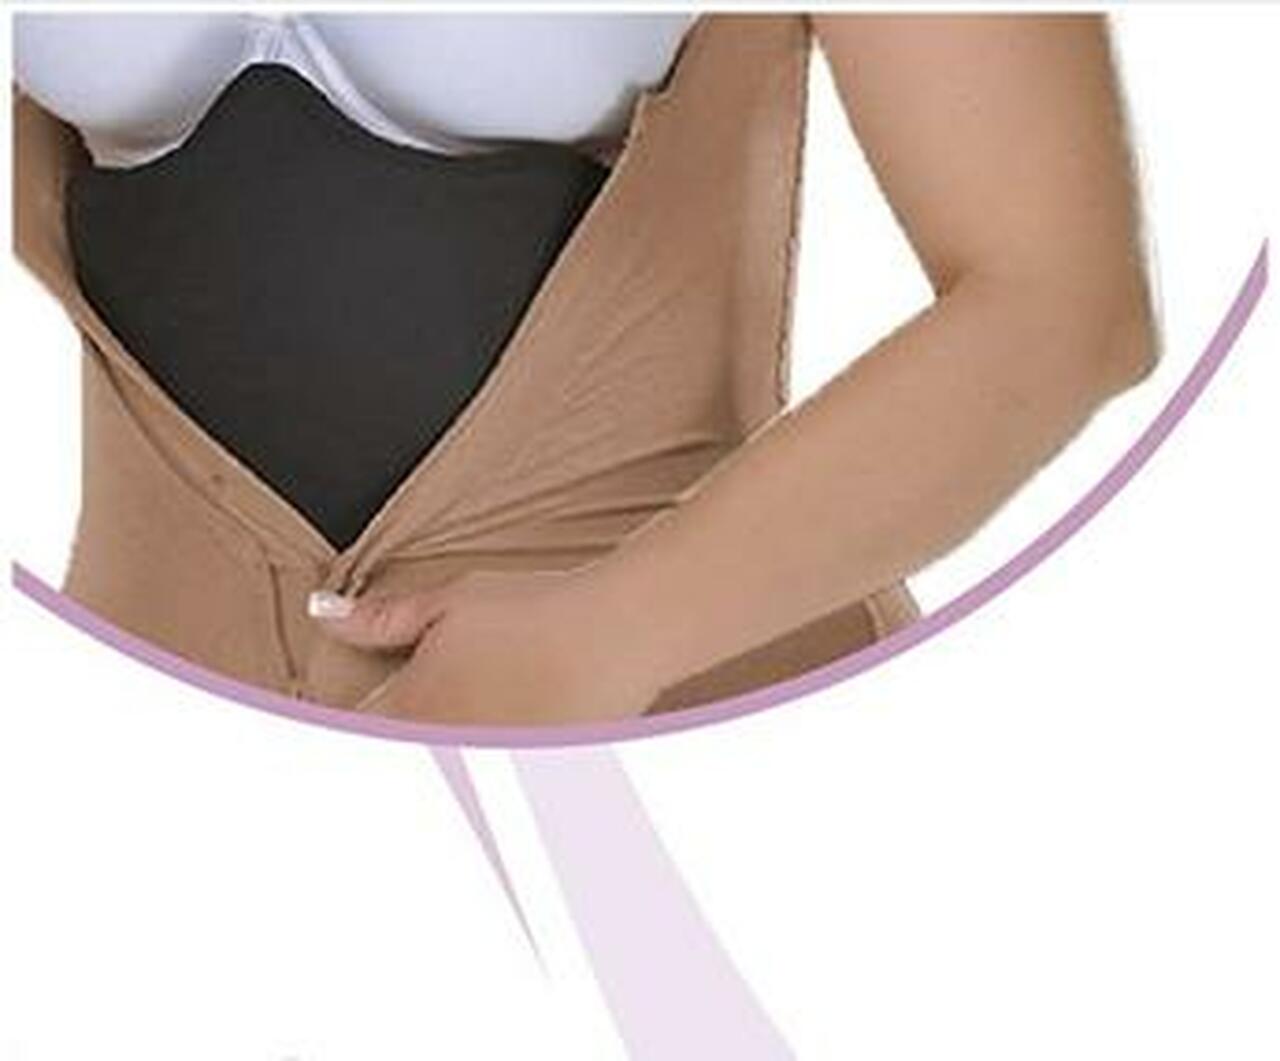 Post Surgery Post Cirugia Faja Colombiana Liposuction Tummy Tuck Women  EnFajate